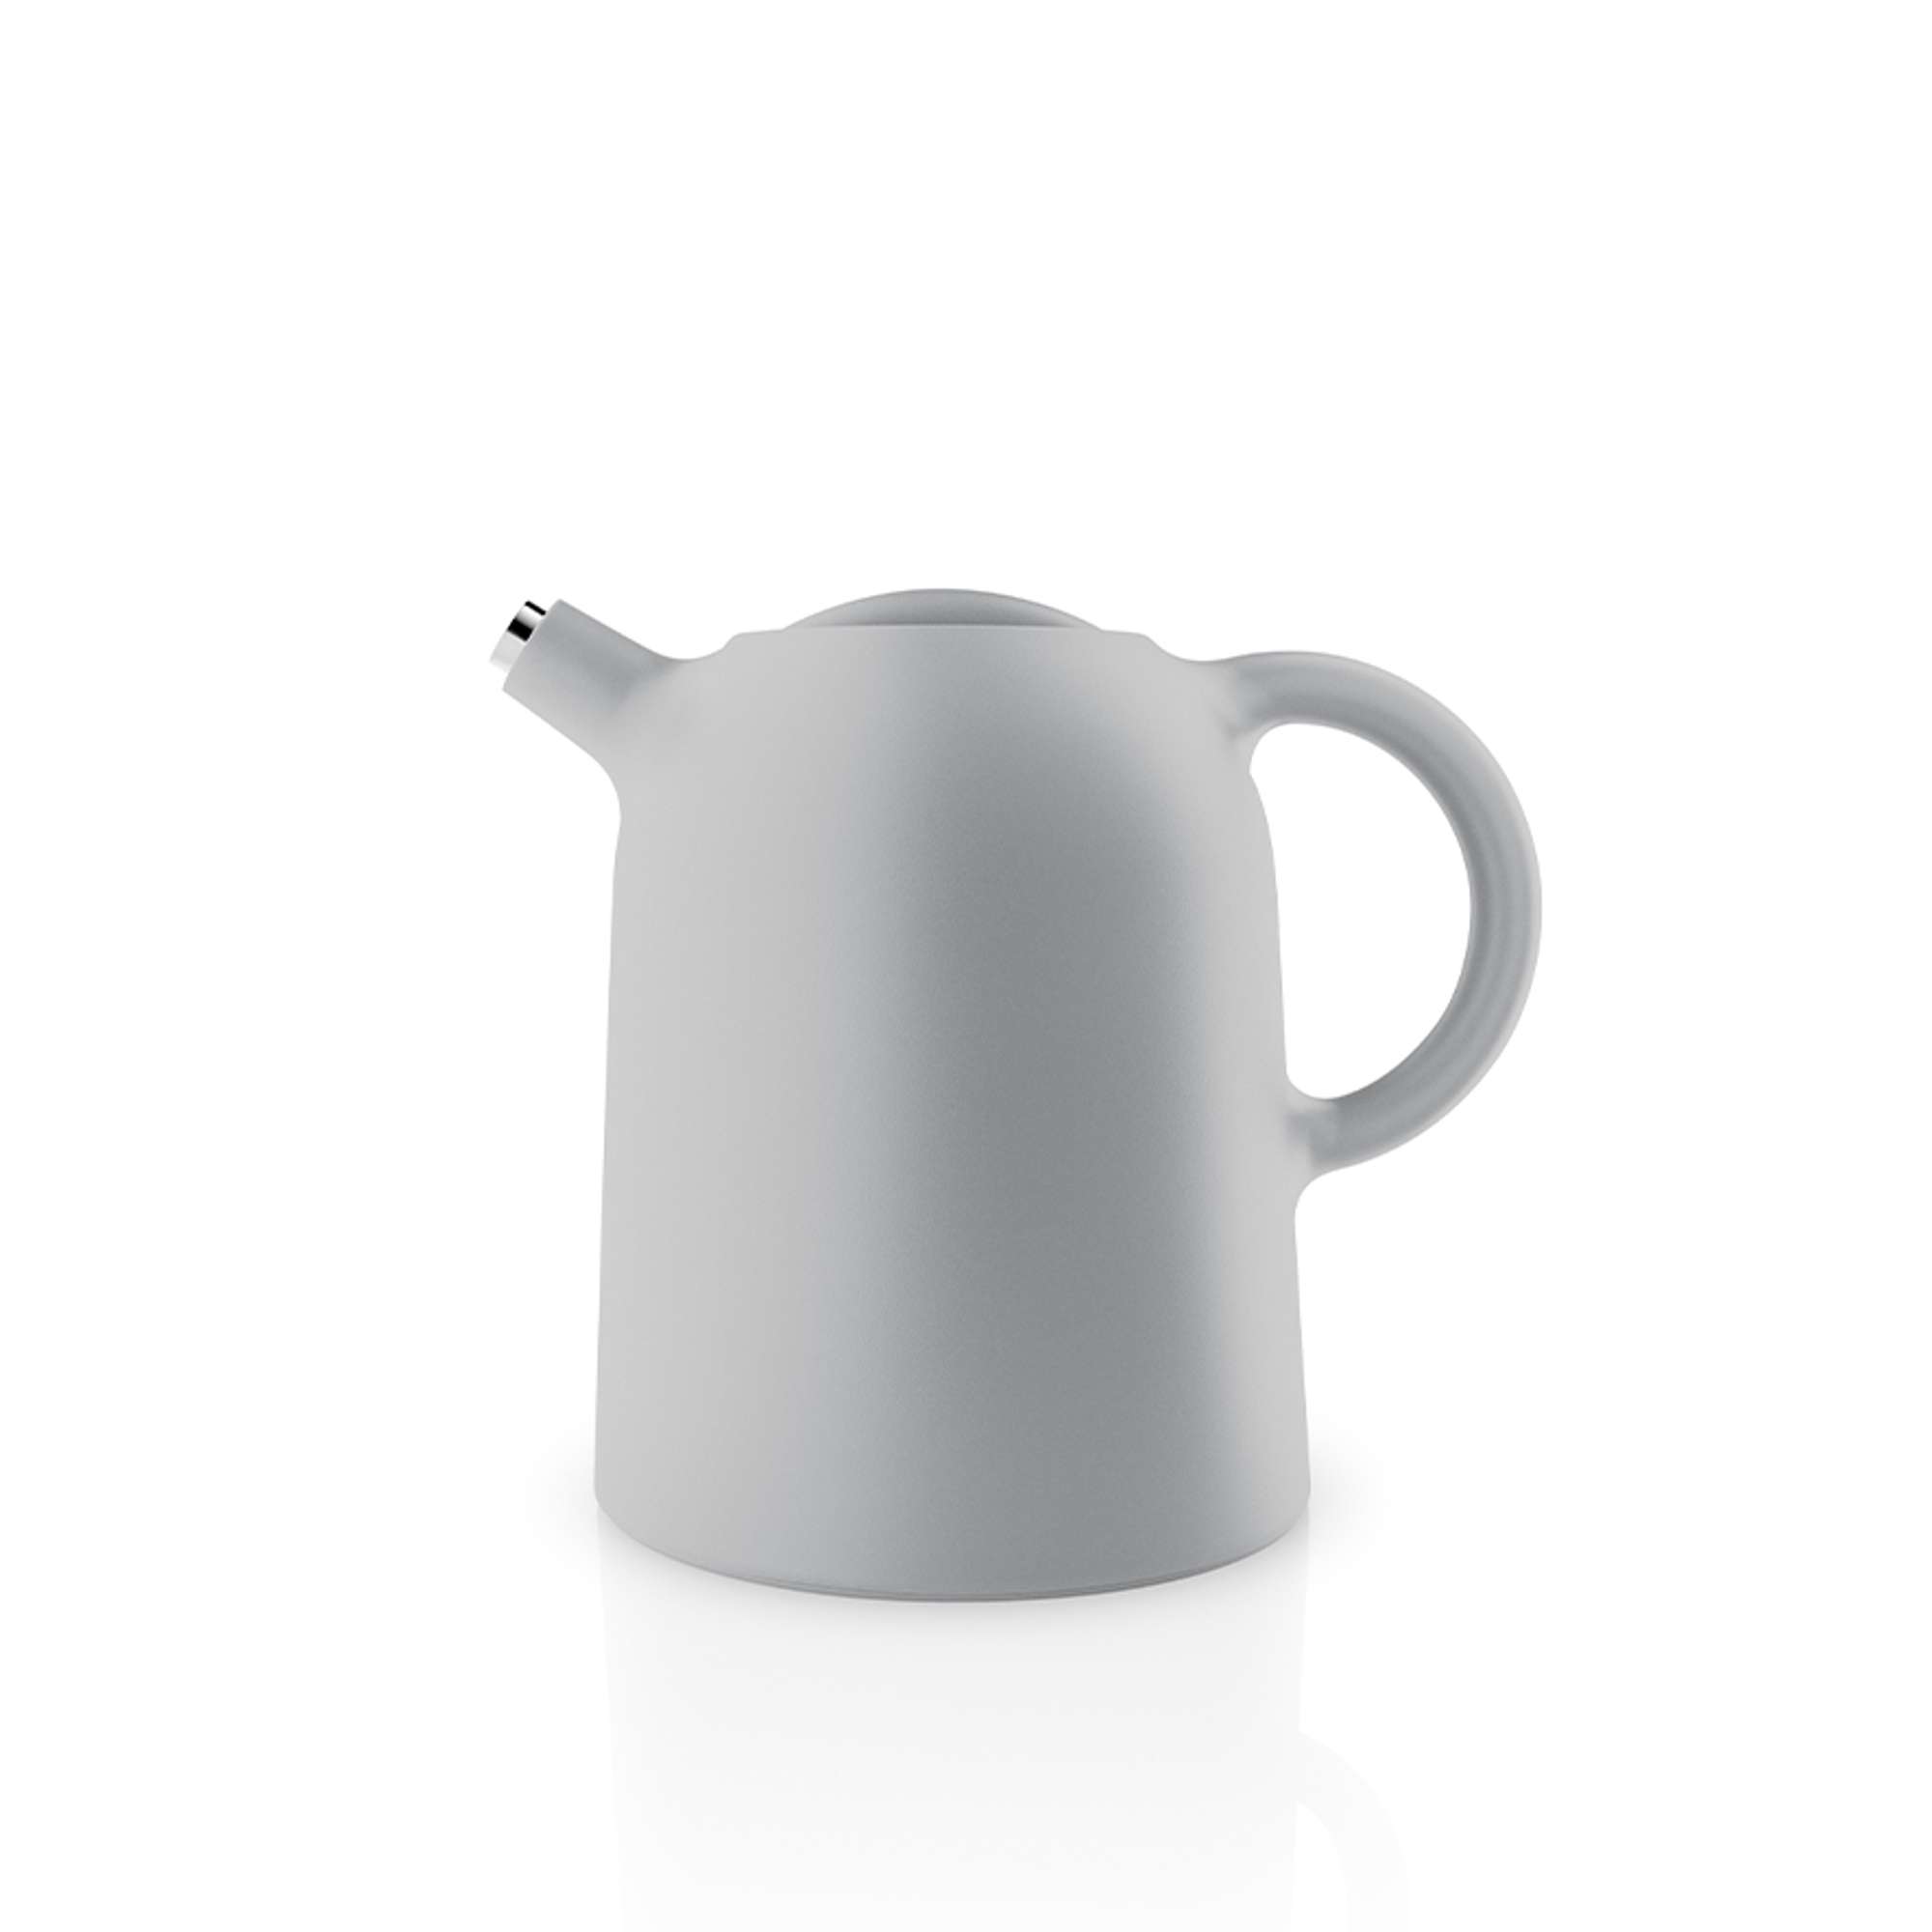 Thimble vacuum jug - 1 liter - Marble grey